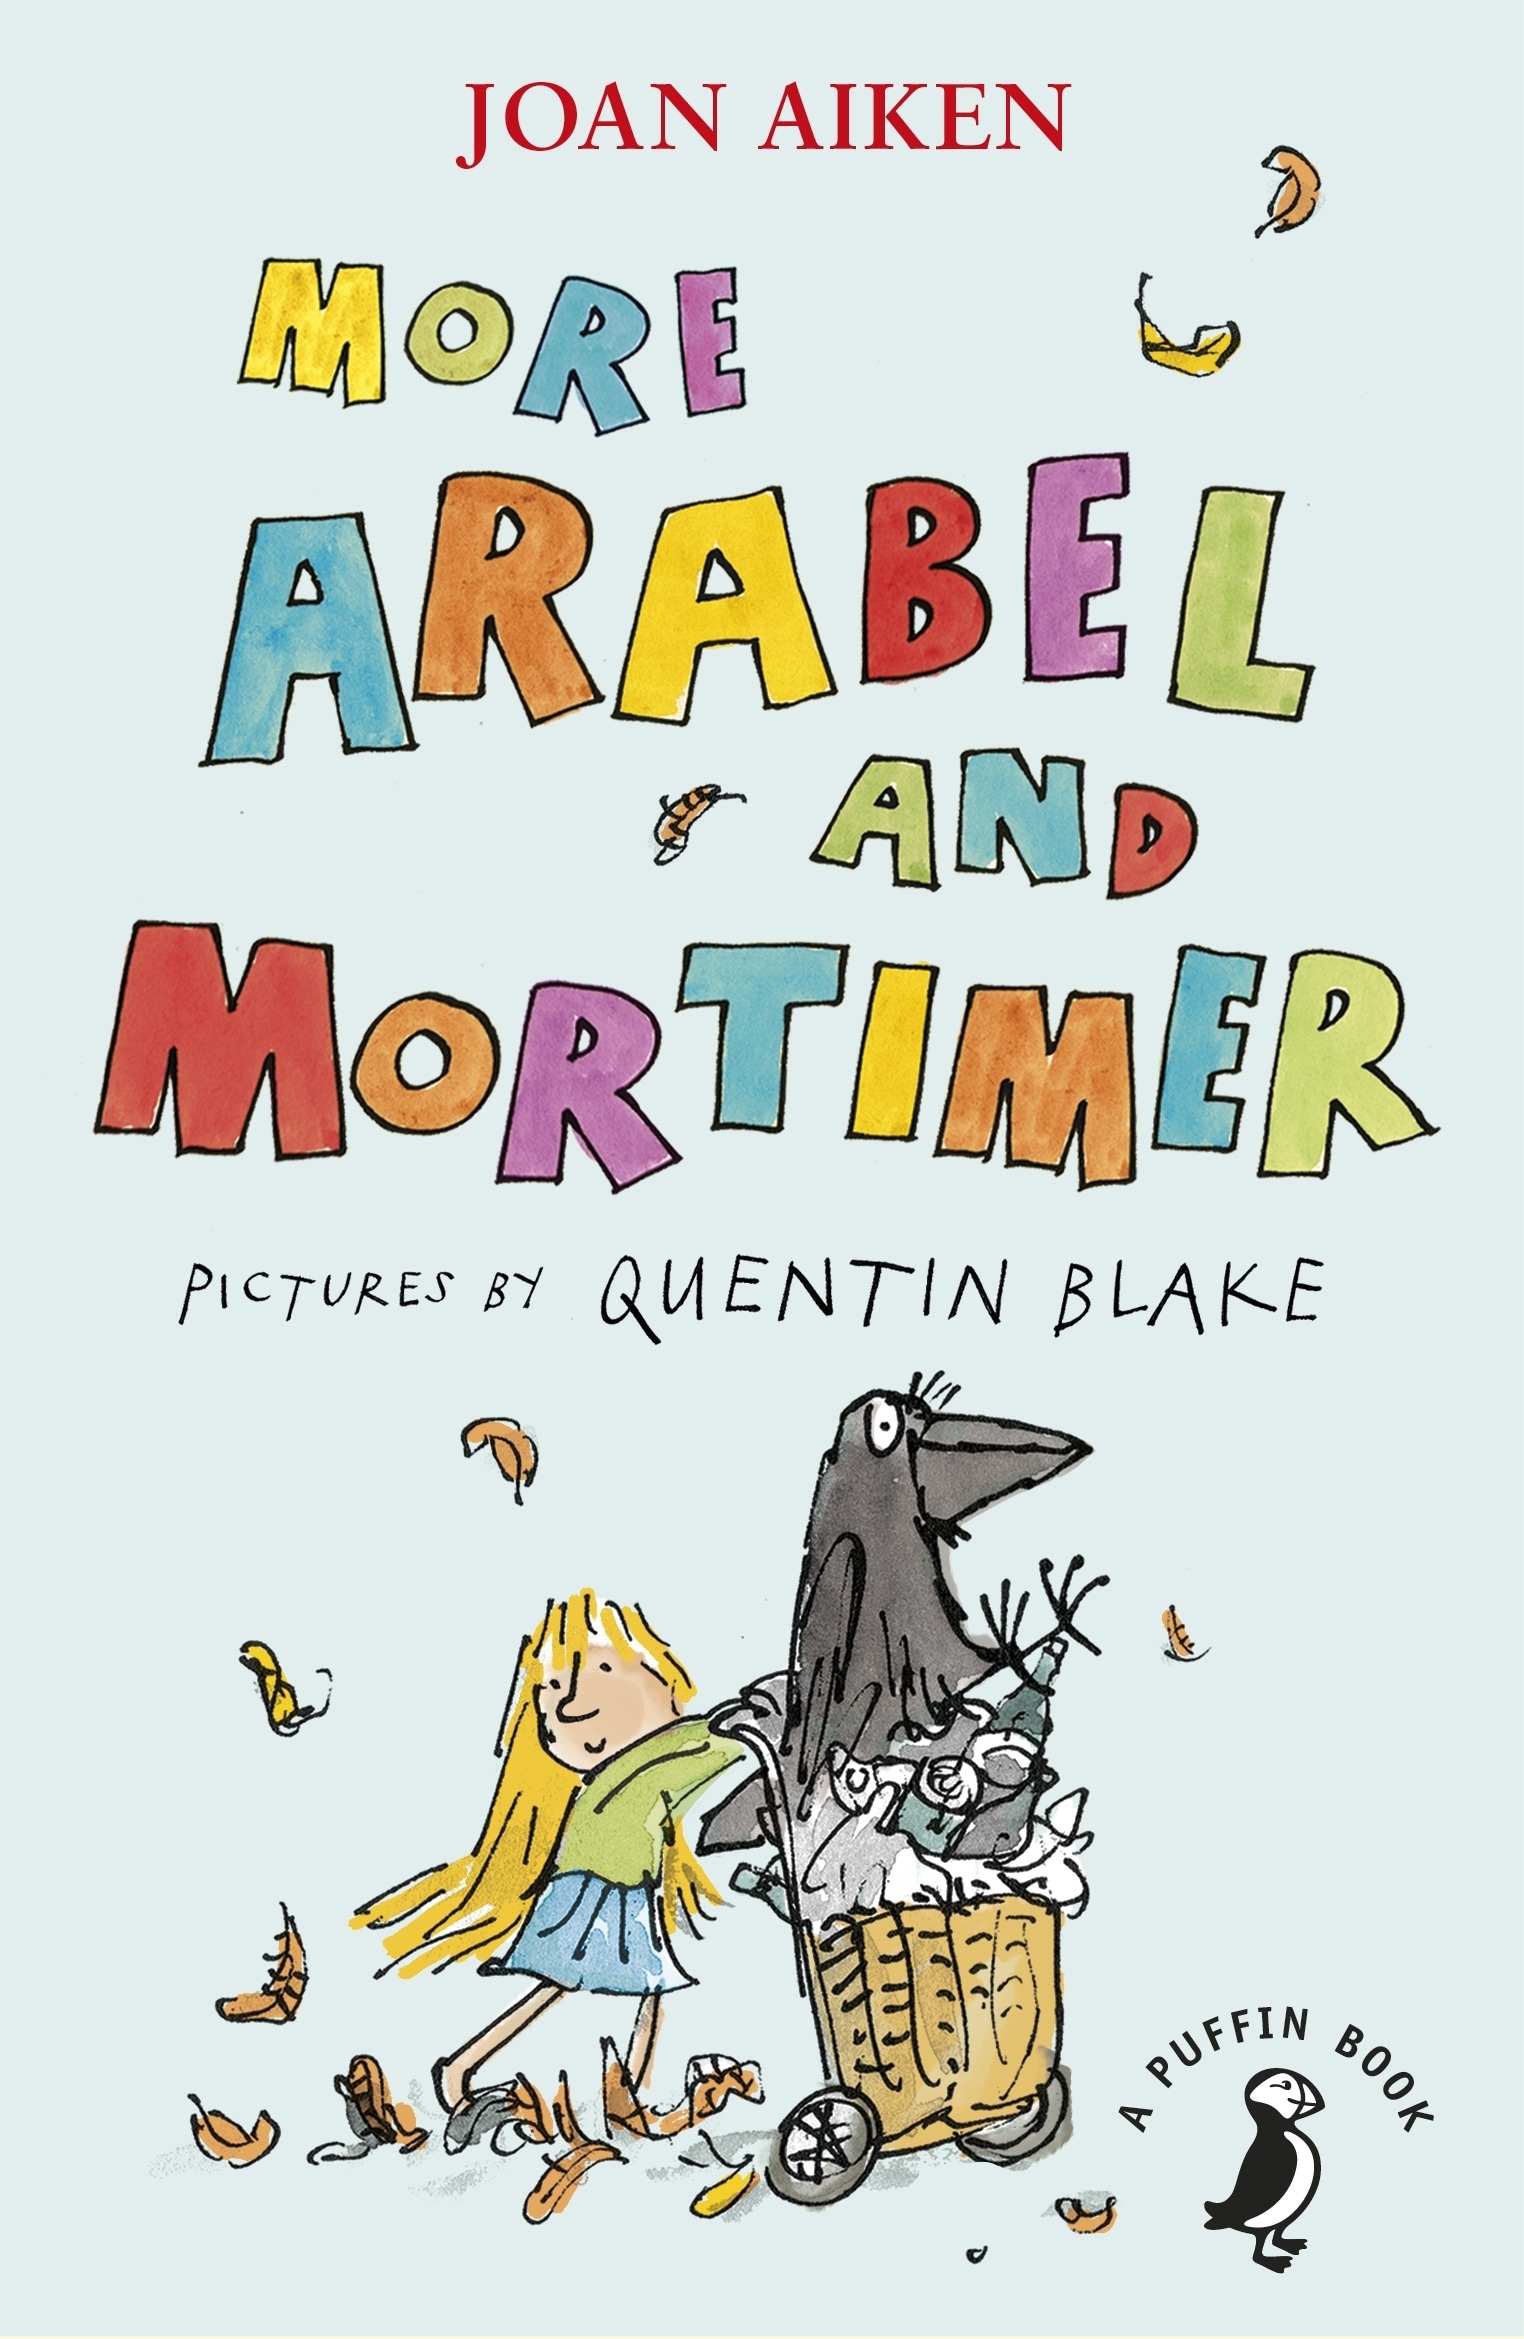 Book “More Arabel and Mortimer” by Joan Aiken, Quentin Blake — October 3, 2019